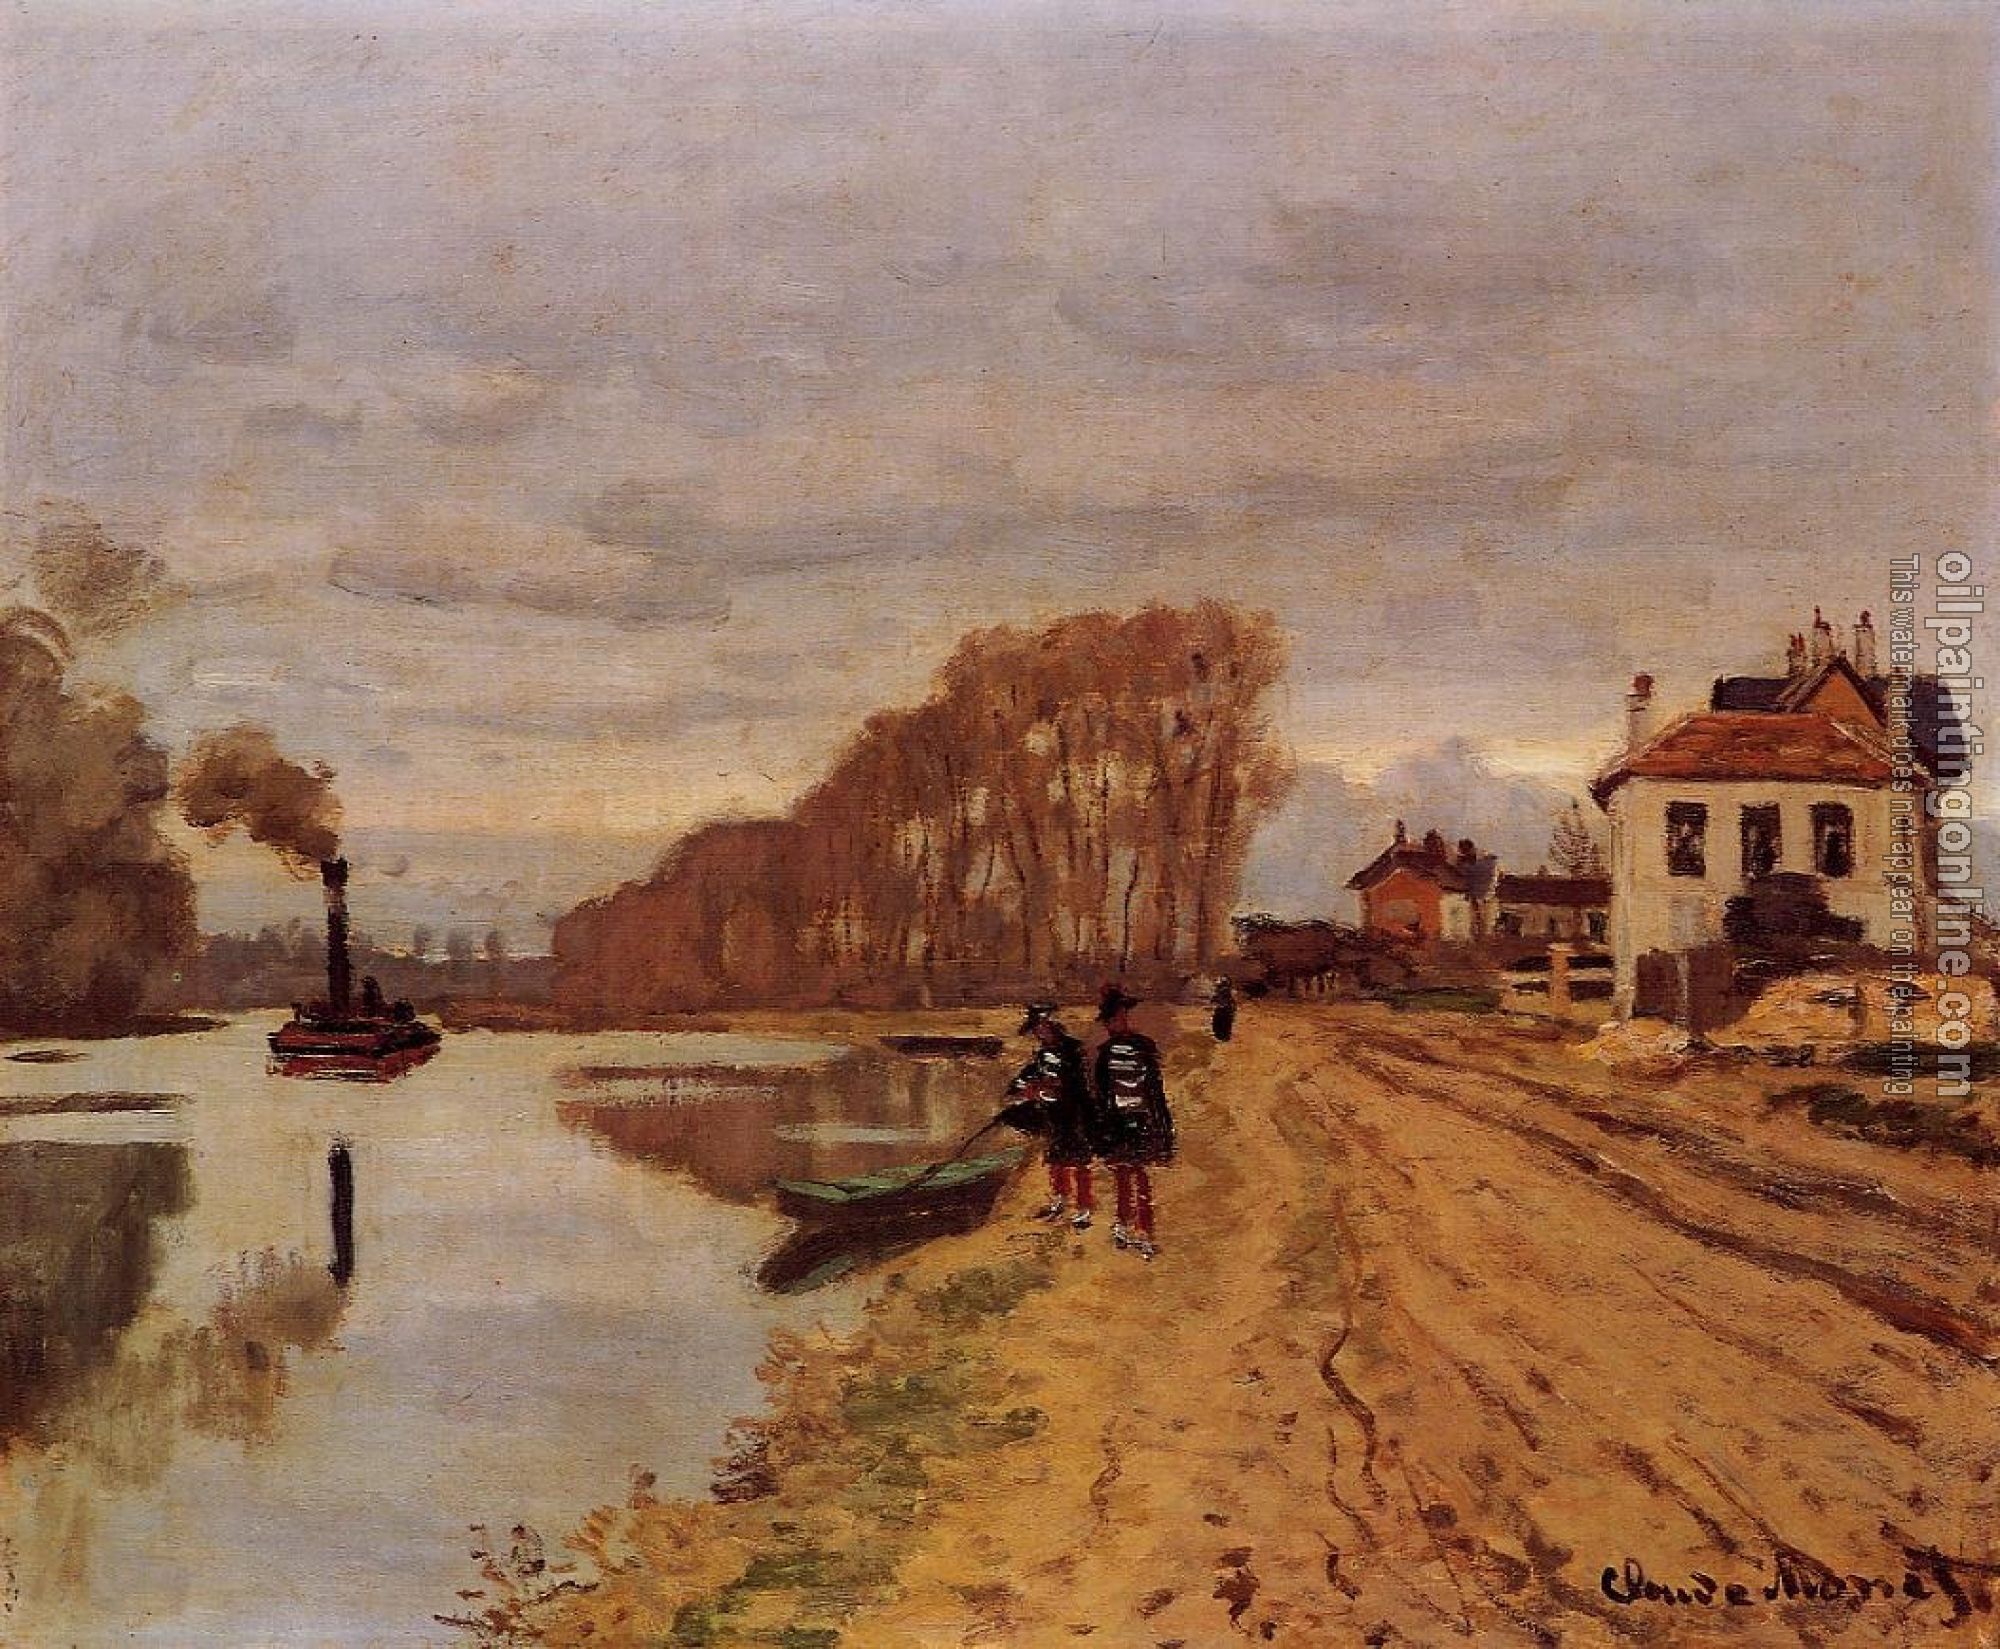 Monet, Claude Oscar - Infantry Guards Wandering along the River